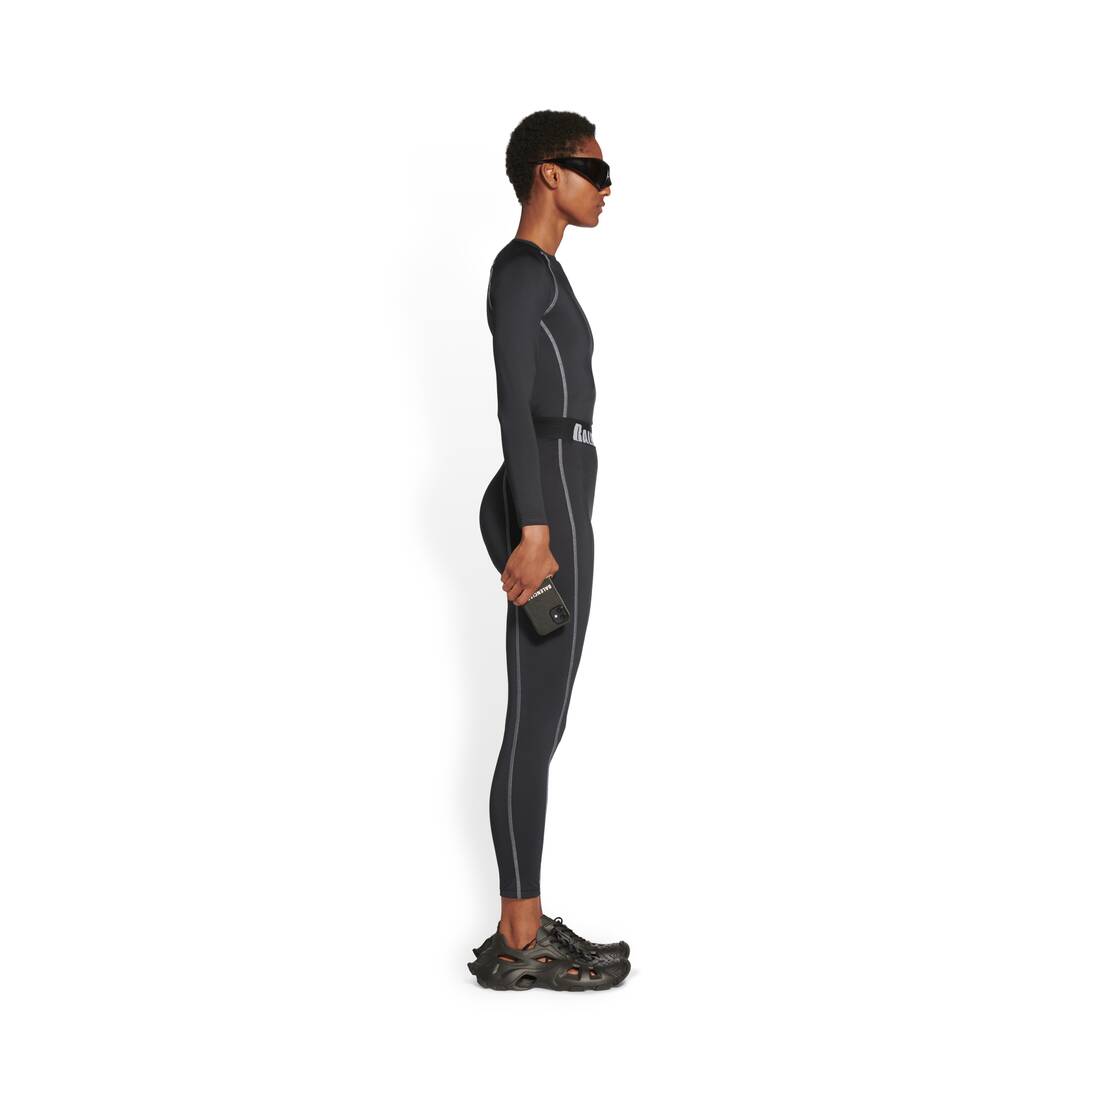 BALENCIAGA women's athletic cut leggings pants black / gray M for